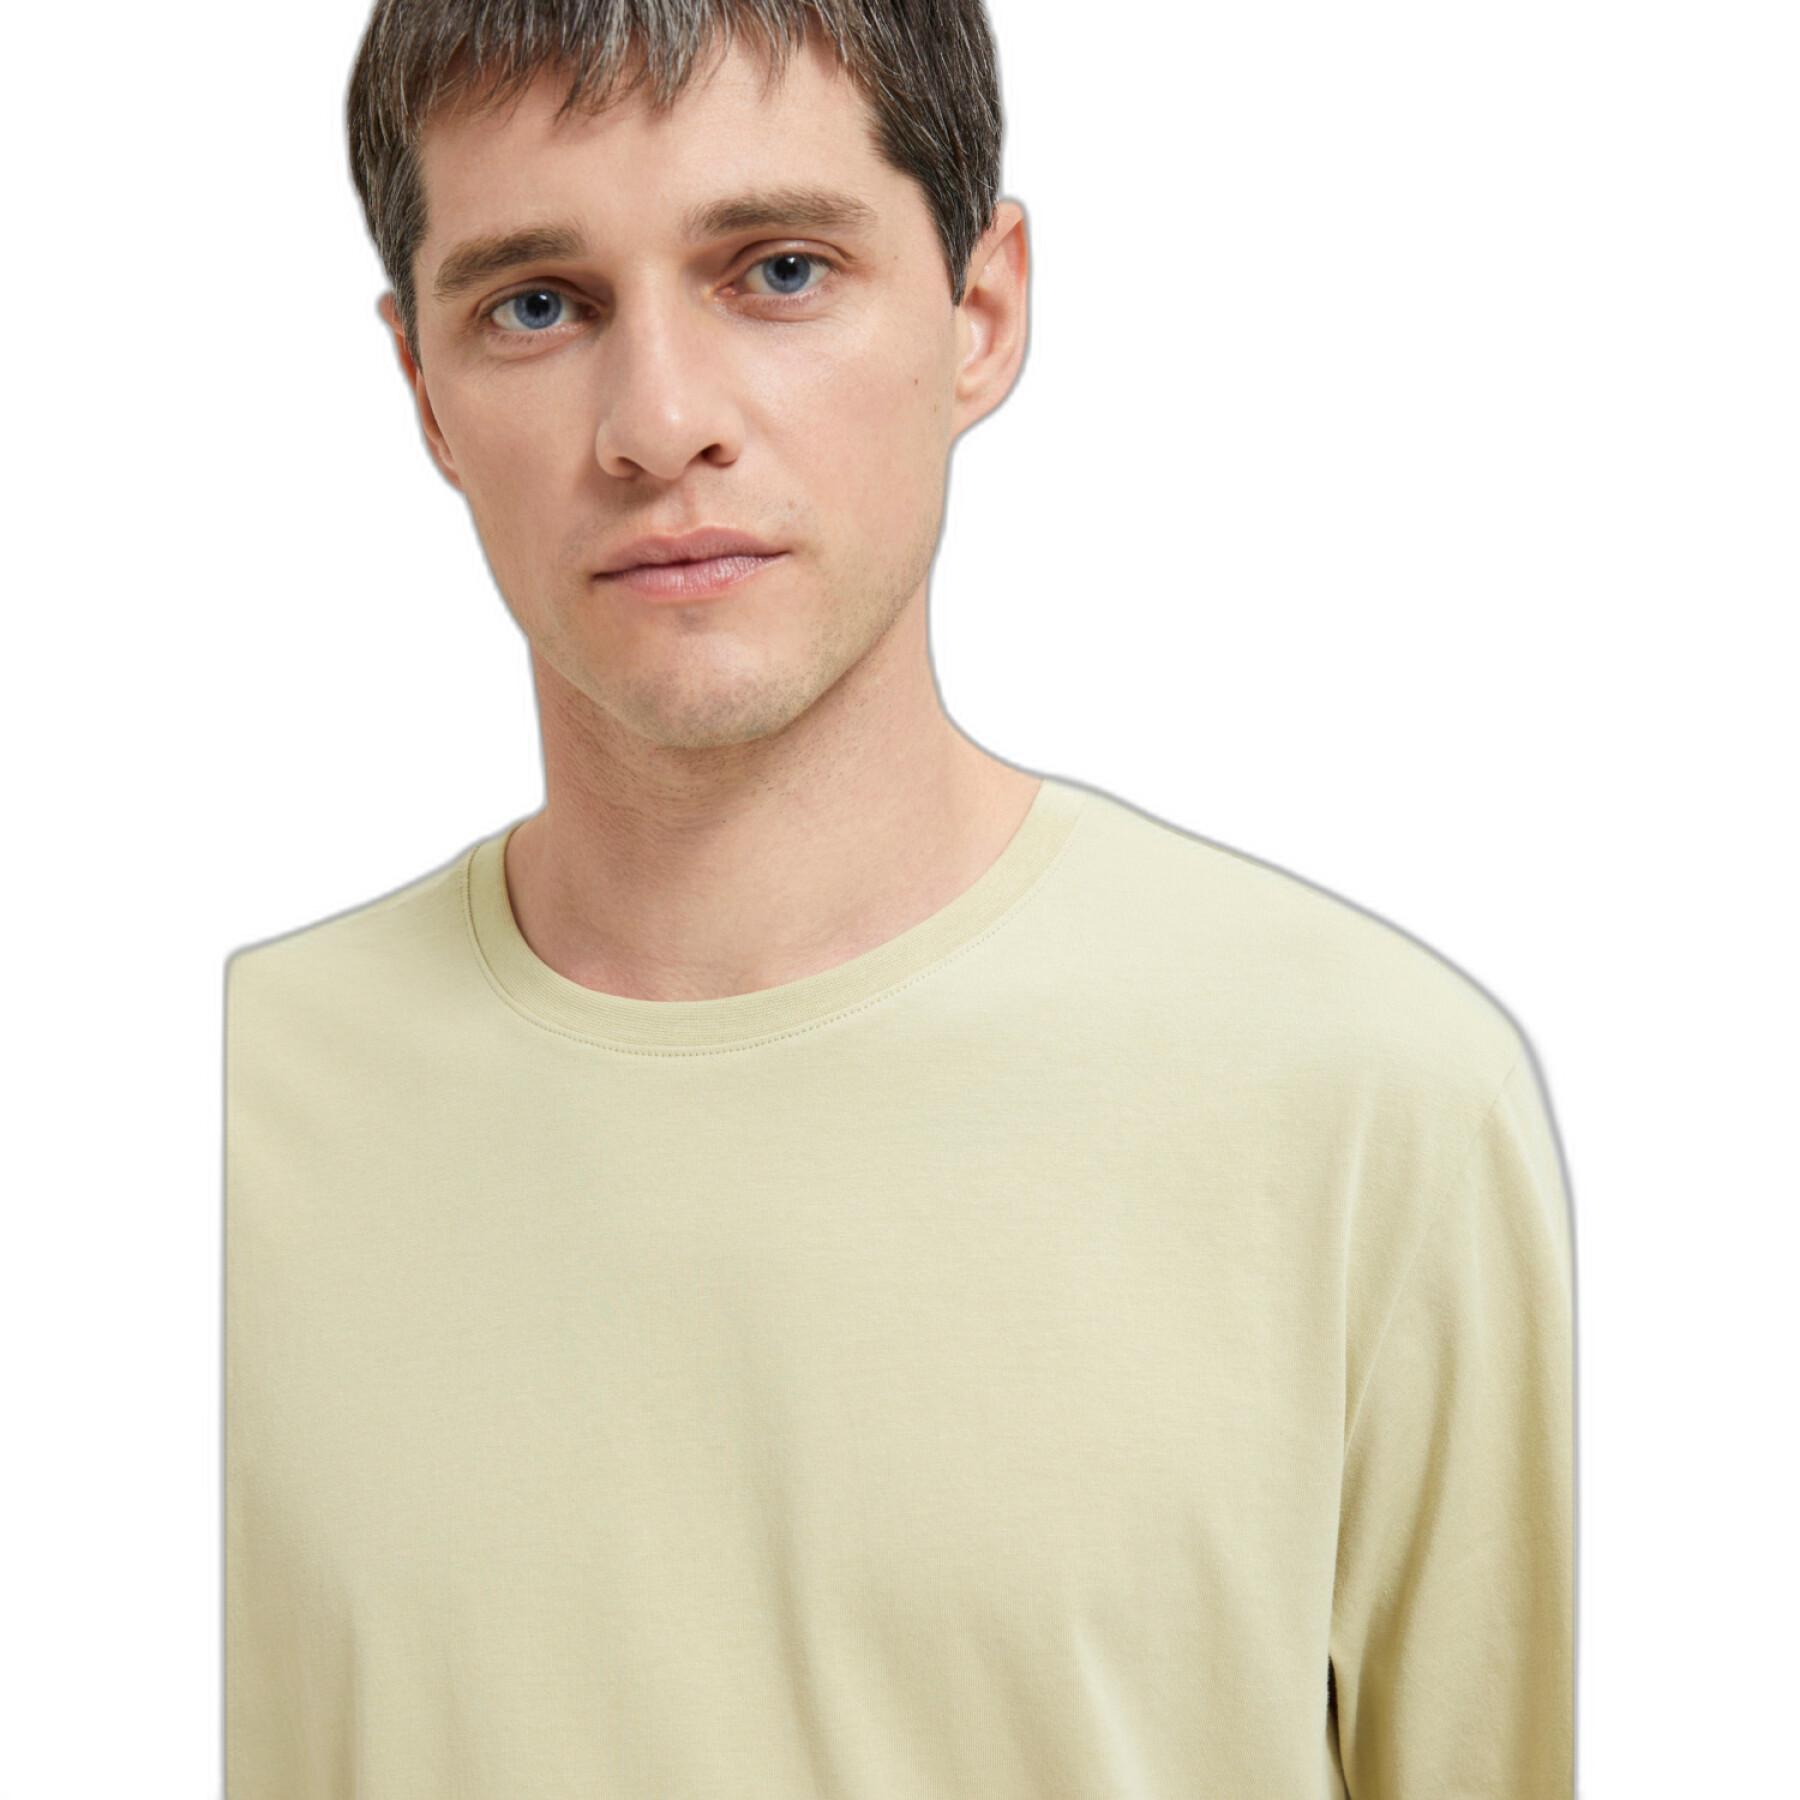 T-shirt round neck Selected Aspen